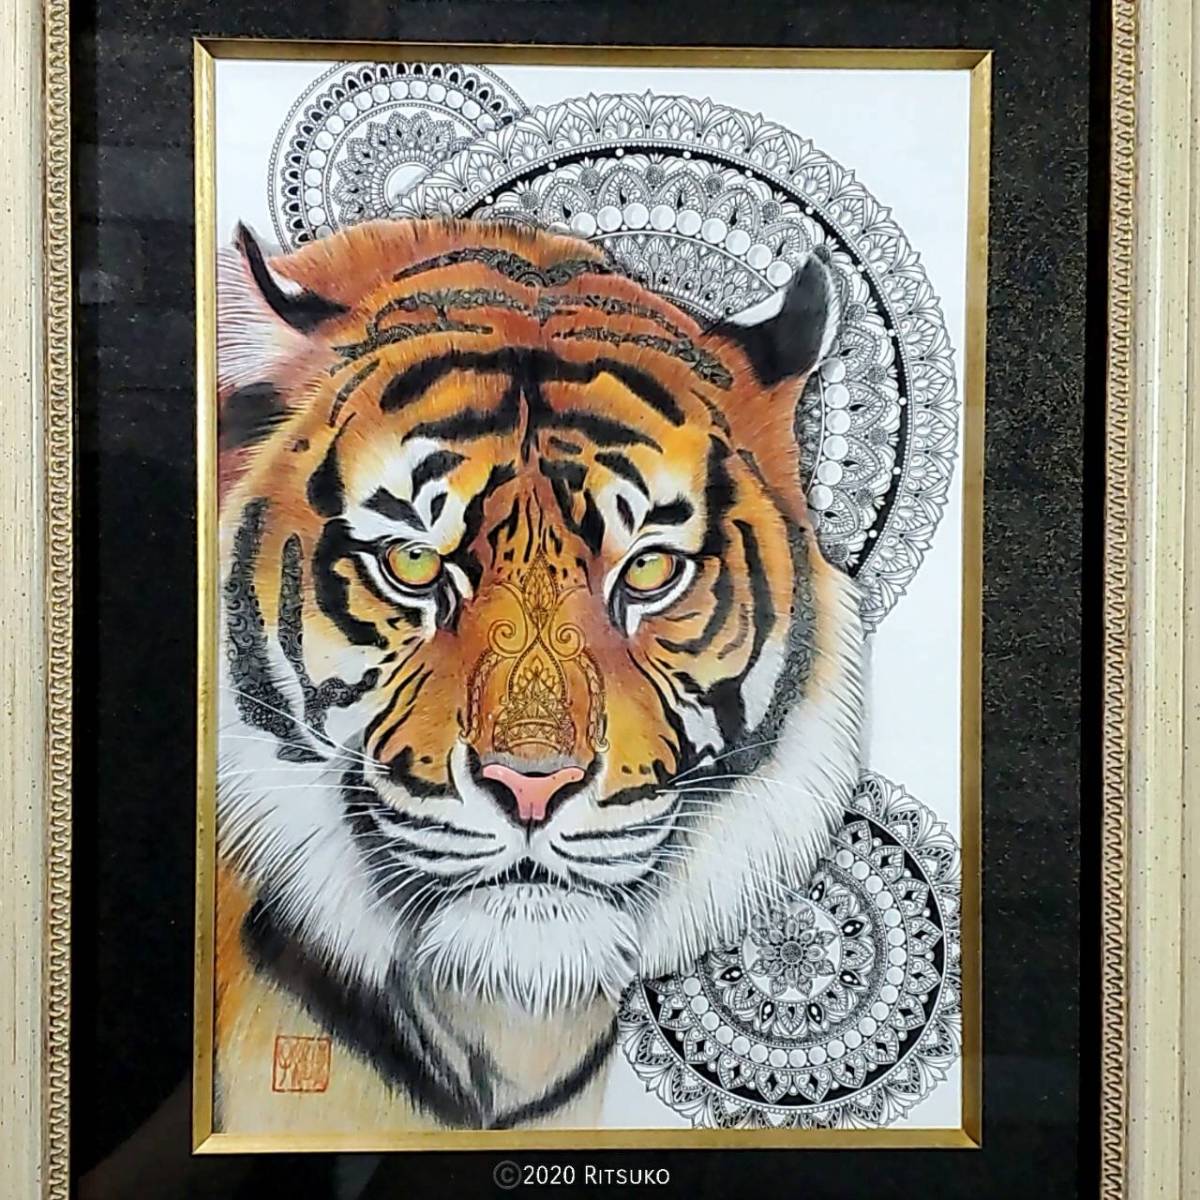 Original único en su tipo dibujo a lápiz de color bolígrafo dibujo artista japonés tigre tigre pintura dibujo arte interior buena suerte tigre dibujo signo del zodiaco, obra de arte, cuadro, dibujo a lápiz, dibujo al carbón